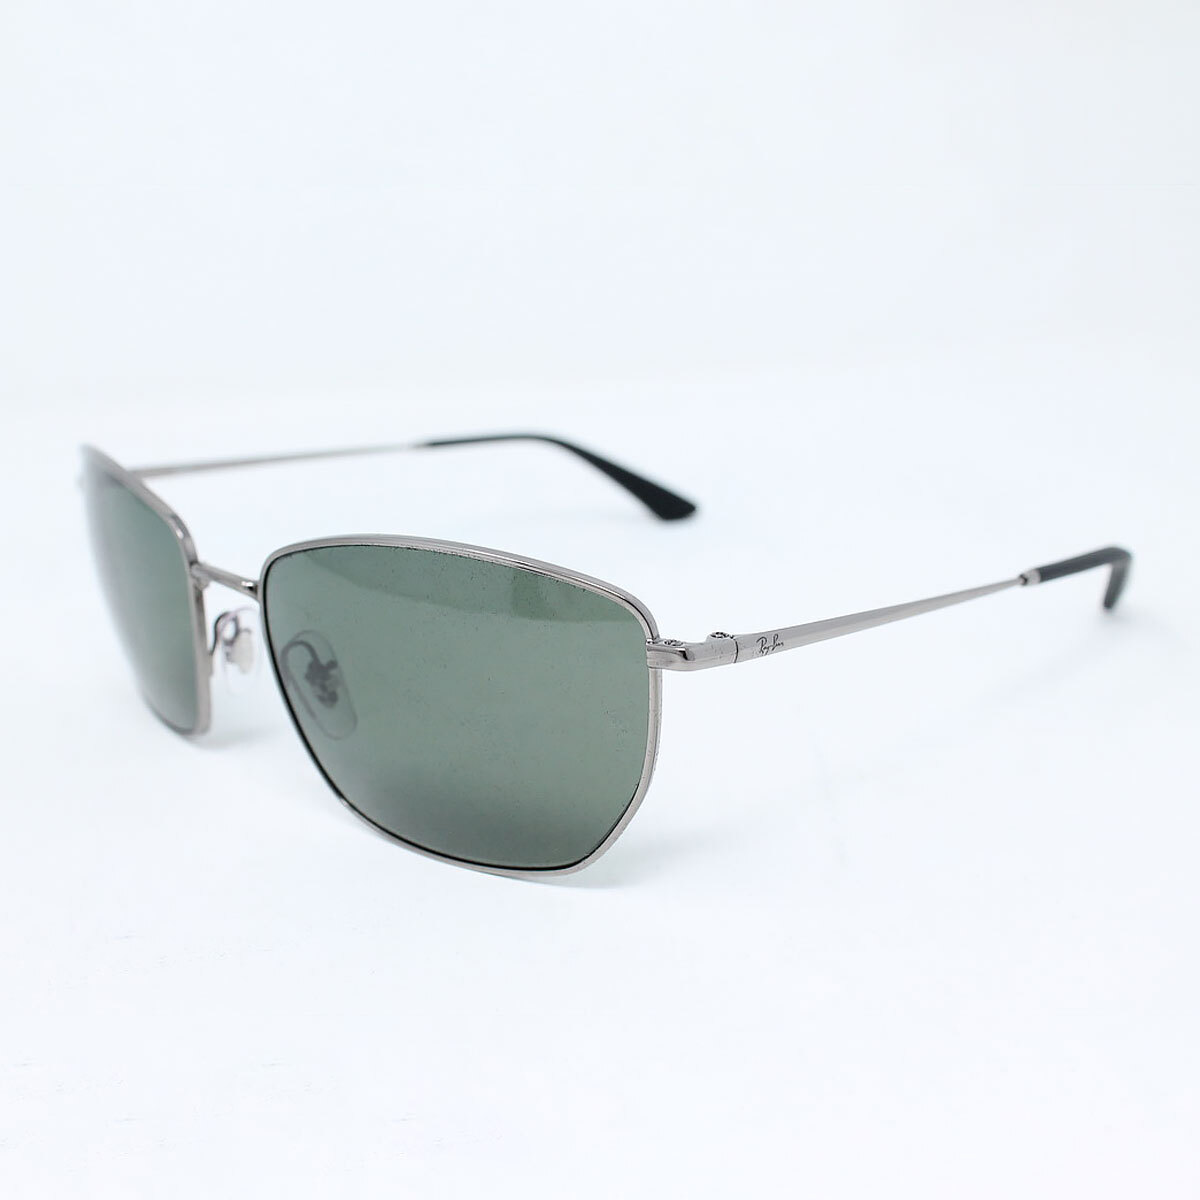 costco ray ban polarized sunglasses